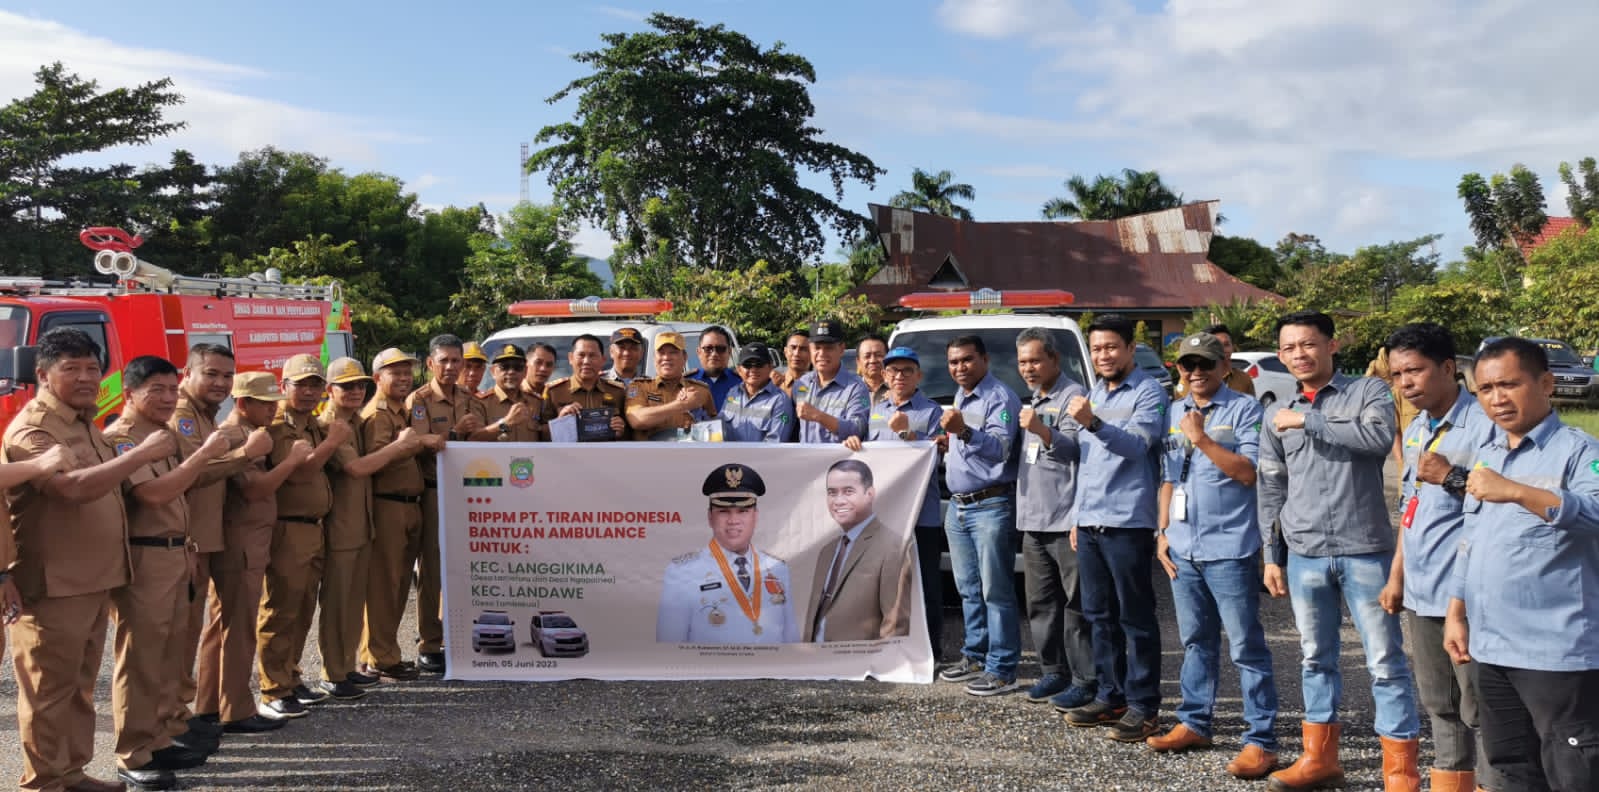 Wujud Kepedulian Terhadap Masyarakat, PT Tiran Indonesia Beri Bantuan Ambulans